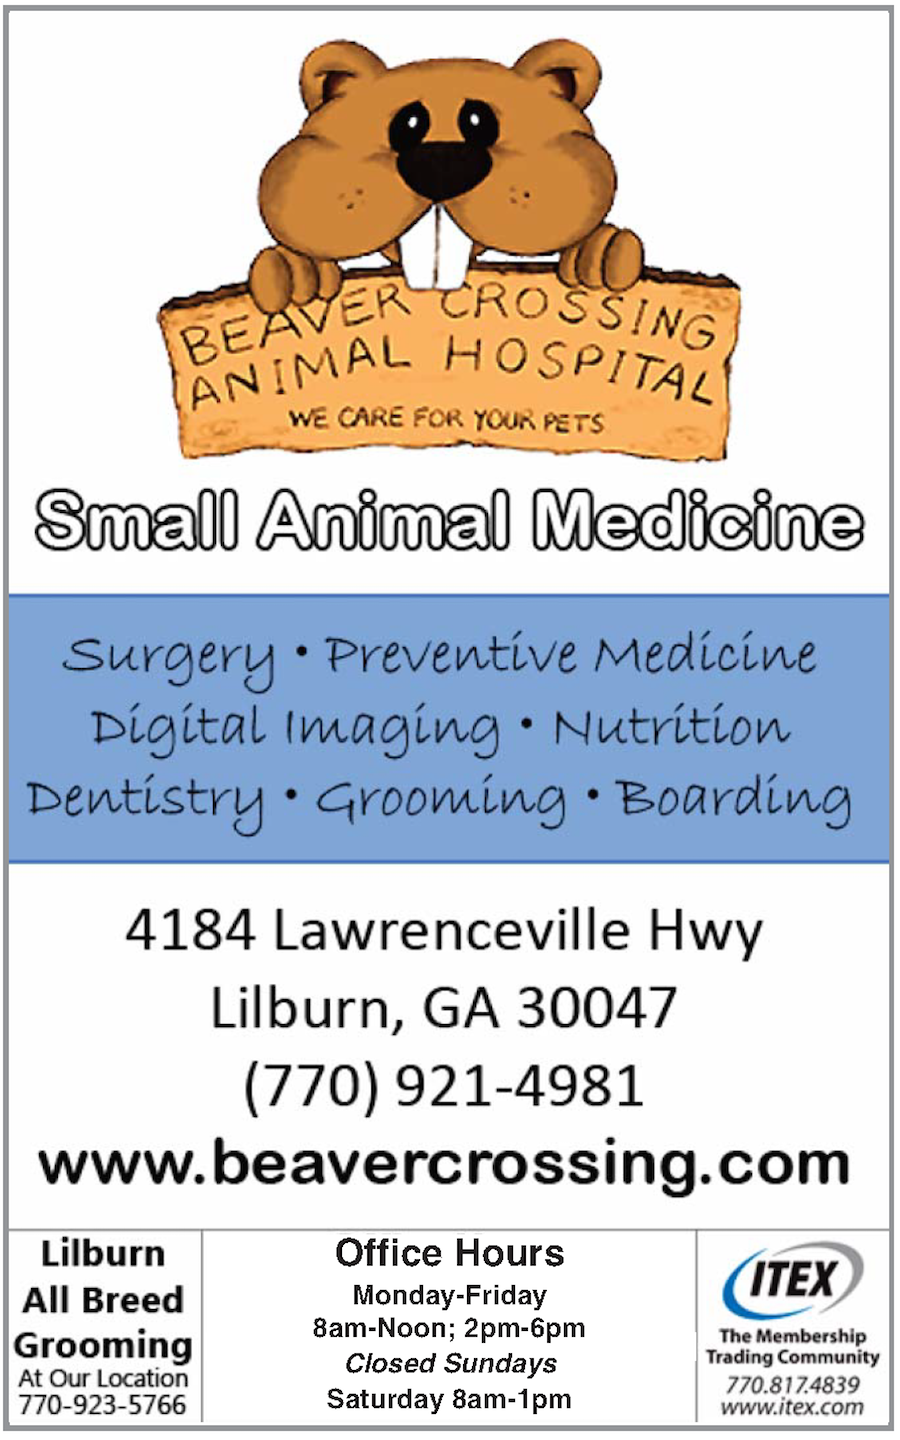 Pets - BEAVER CROSSING ANIMAL HOSPITAL - Atlanta Christian Web